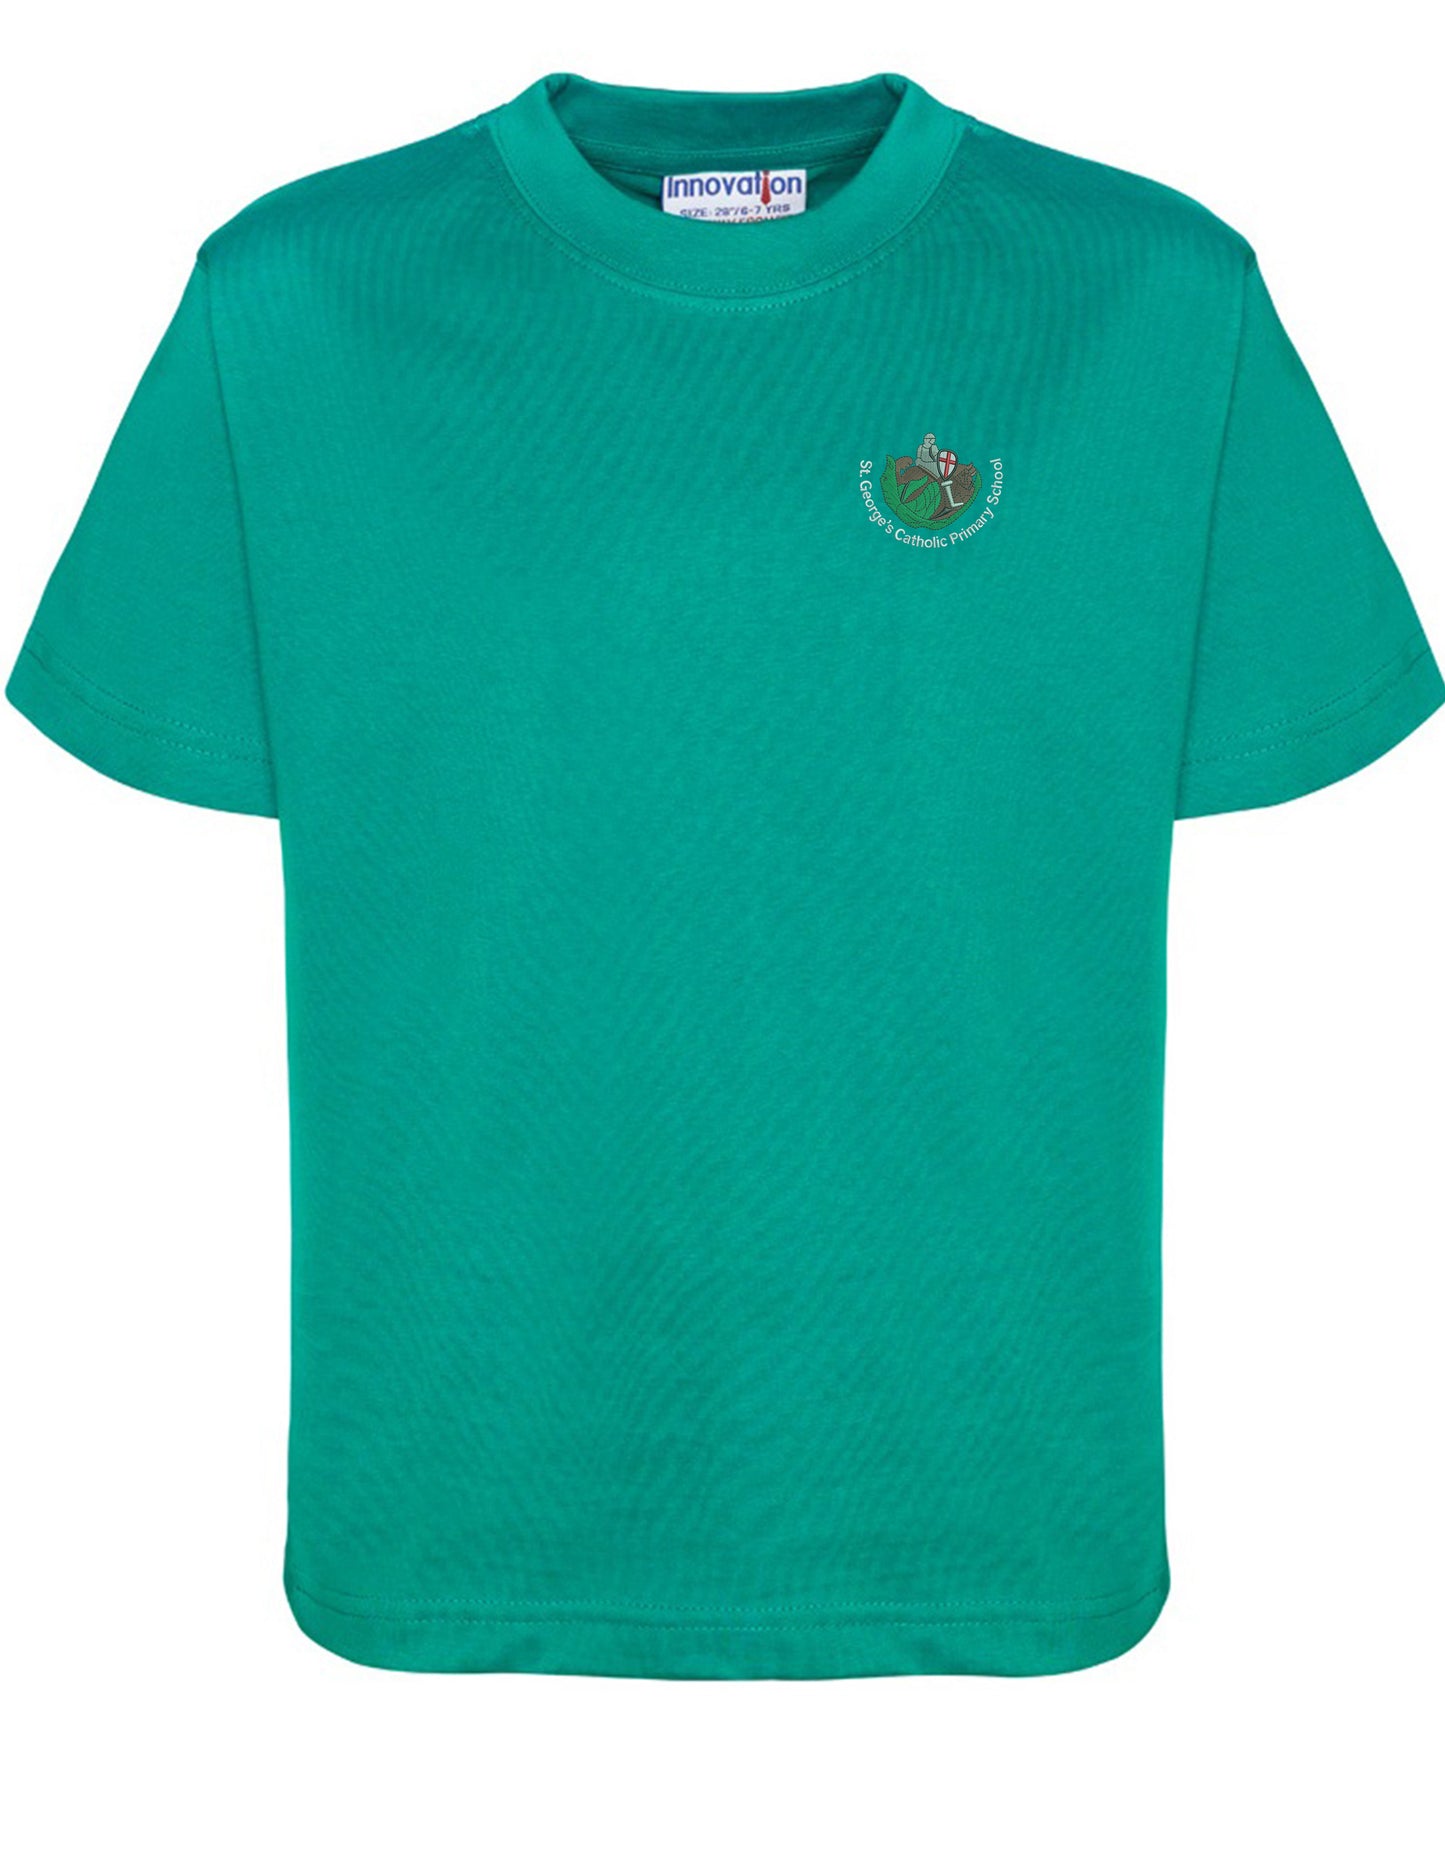 St George's Catholic Primary Voluntary Academy - Unisex Cotton T-Shirt - Jade - School Uniform Shop